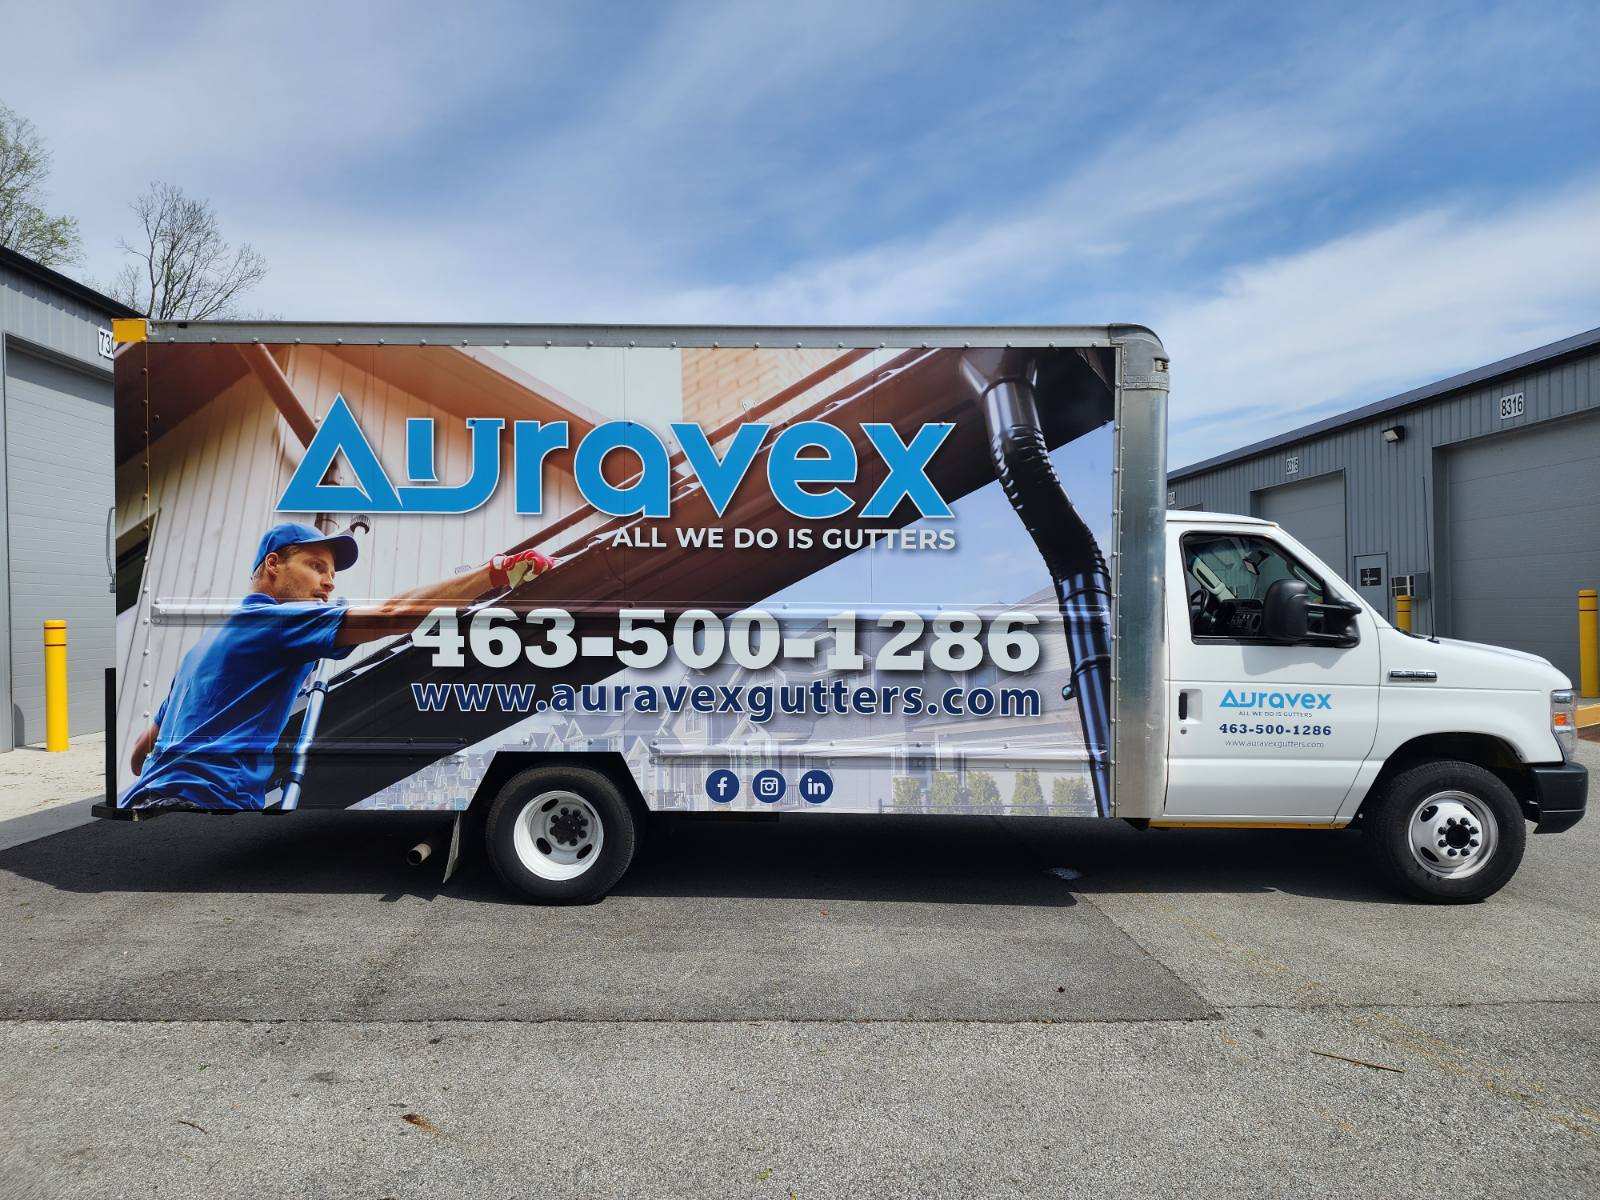 Auravex Gutters service truck